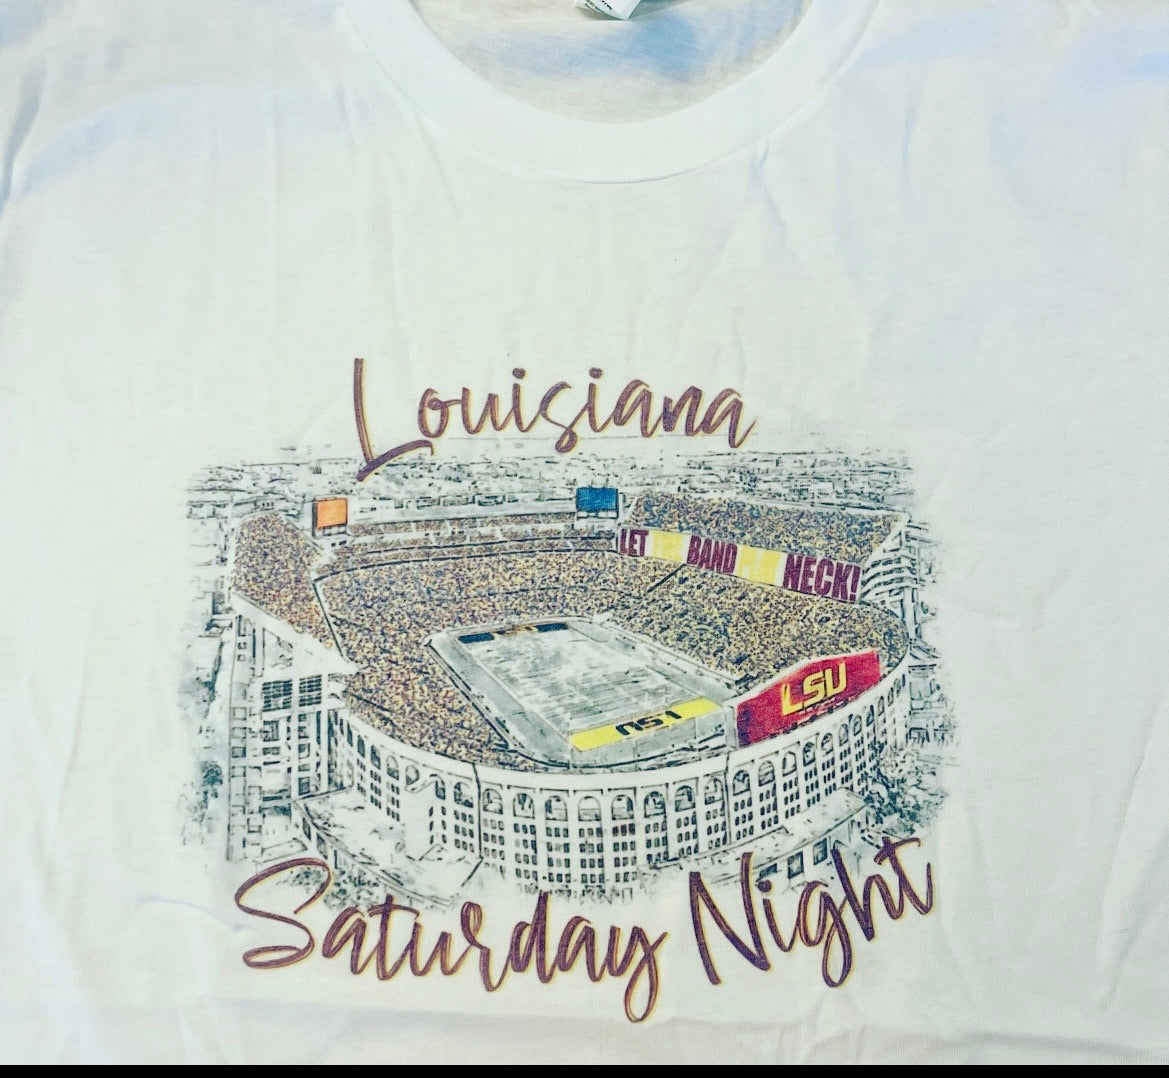 Louisiana Saturday Night-Short-Sleeve Unisex T-Shirt